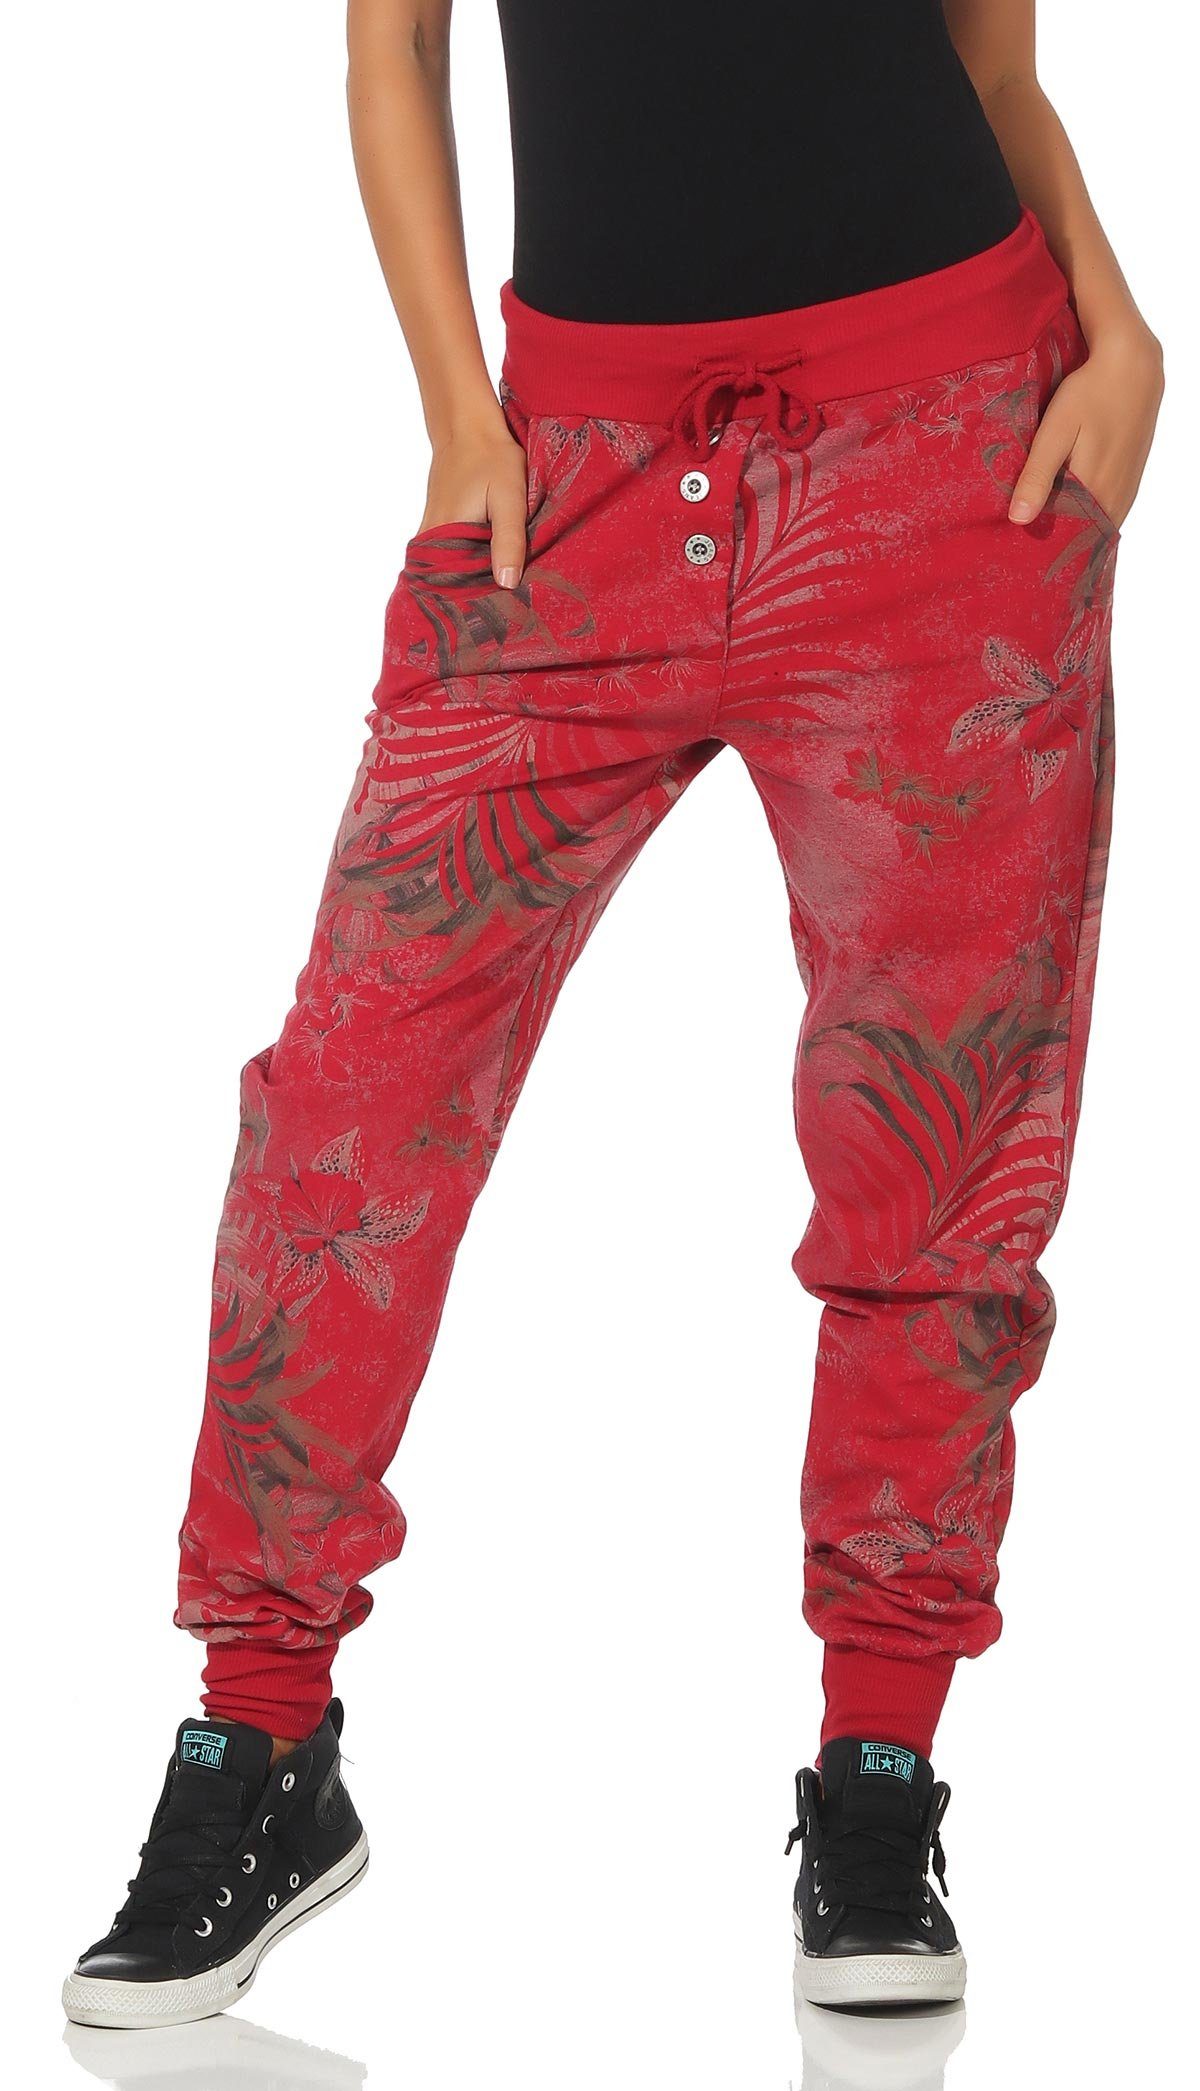 malito more than fashion Jogginghose 83728 Sweatpants mit Jungelprint rot